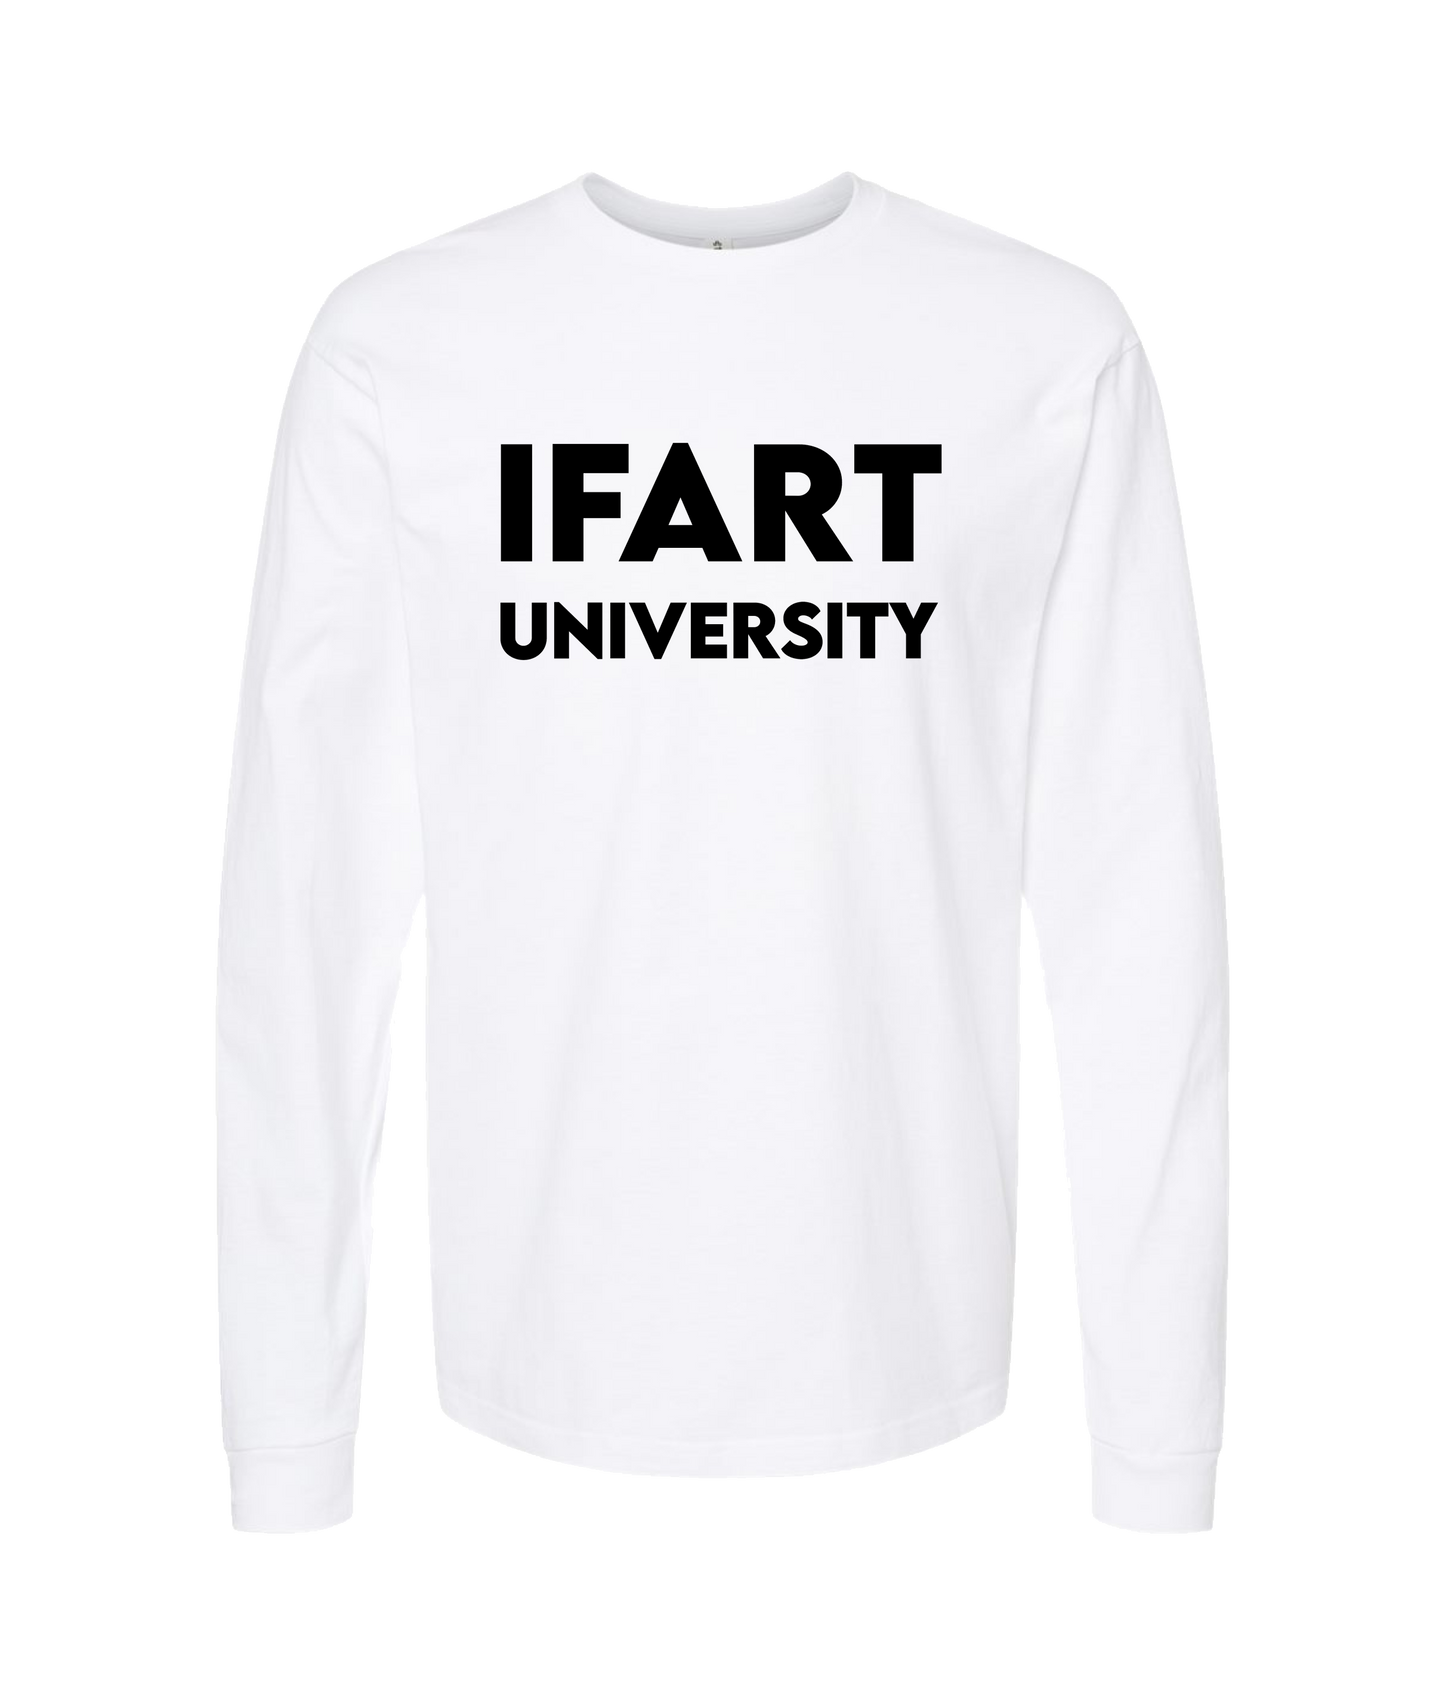 iFart - UNIVERSITY - White Long Sleeve T